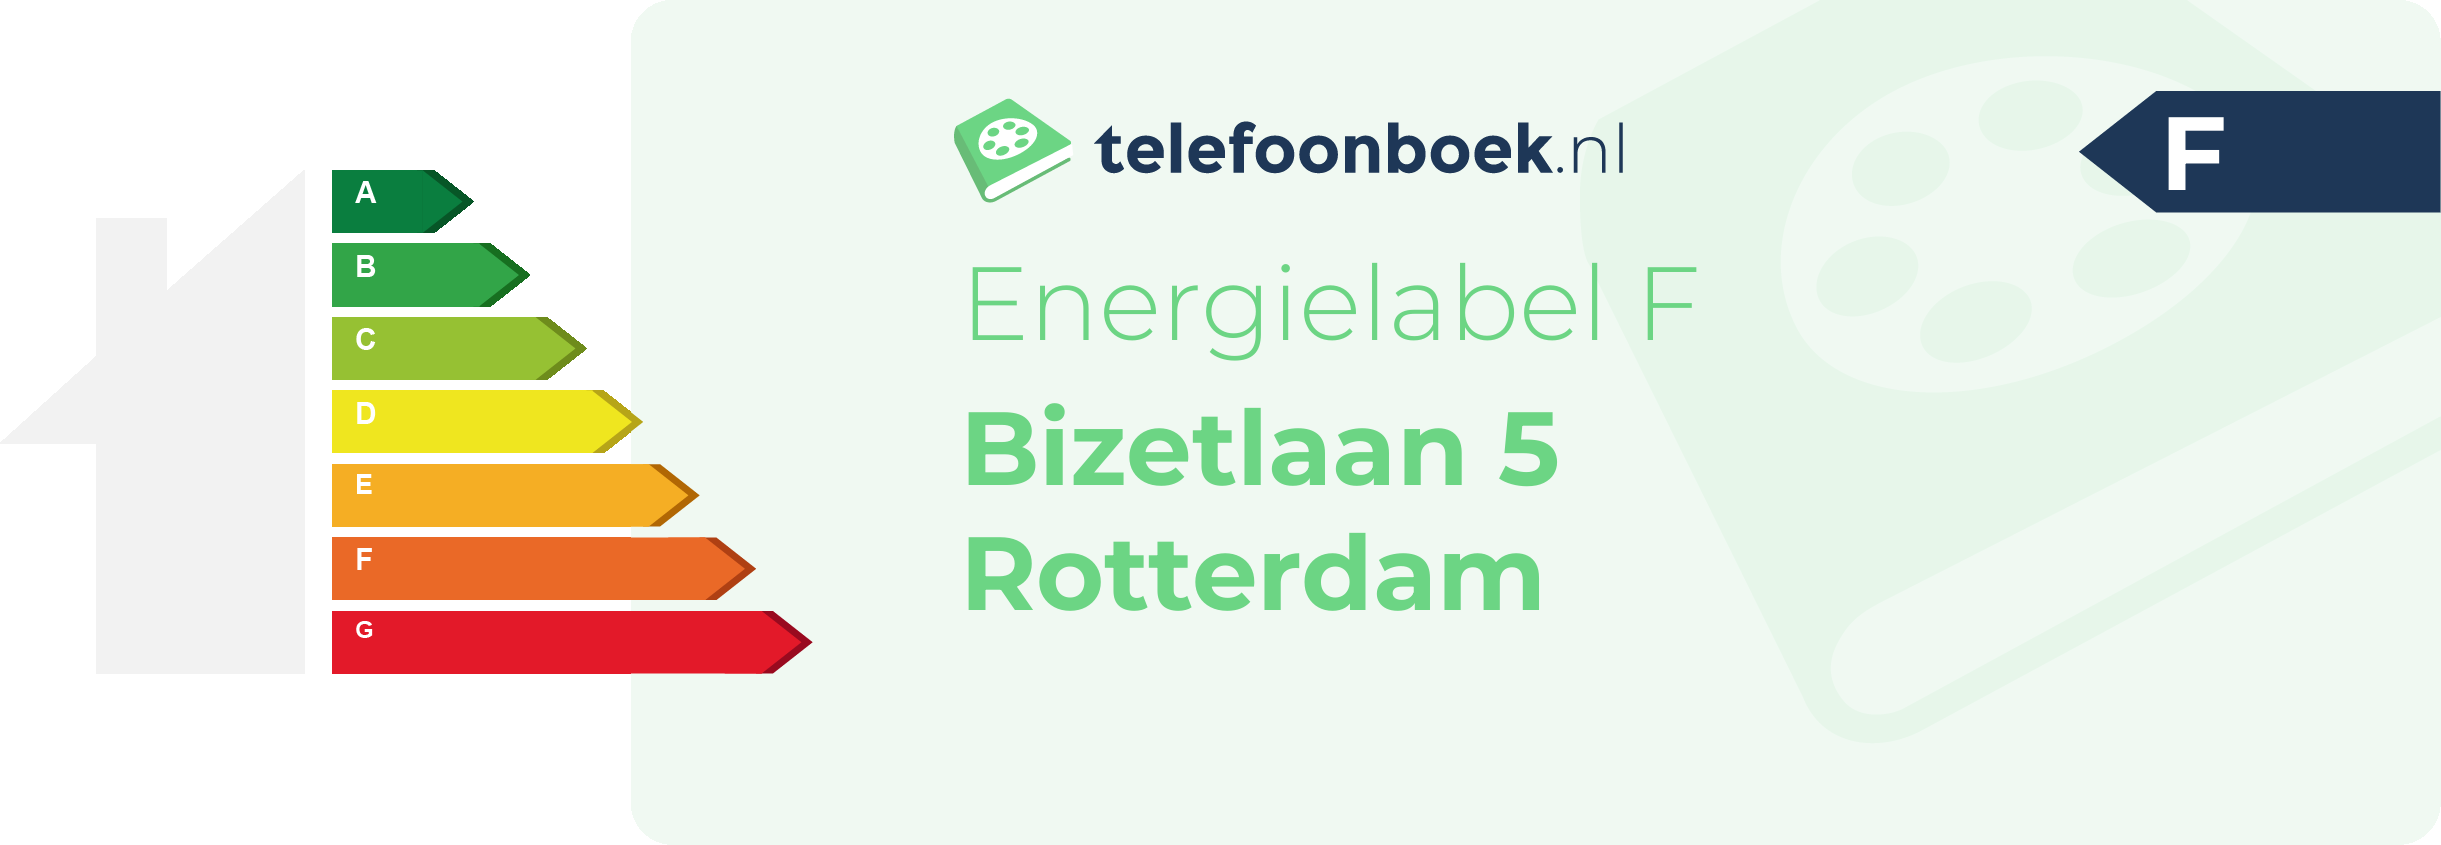 Energielabel Bizetlaan 5 Rotterdam